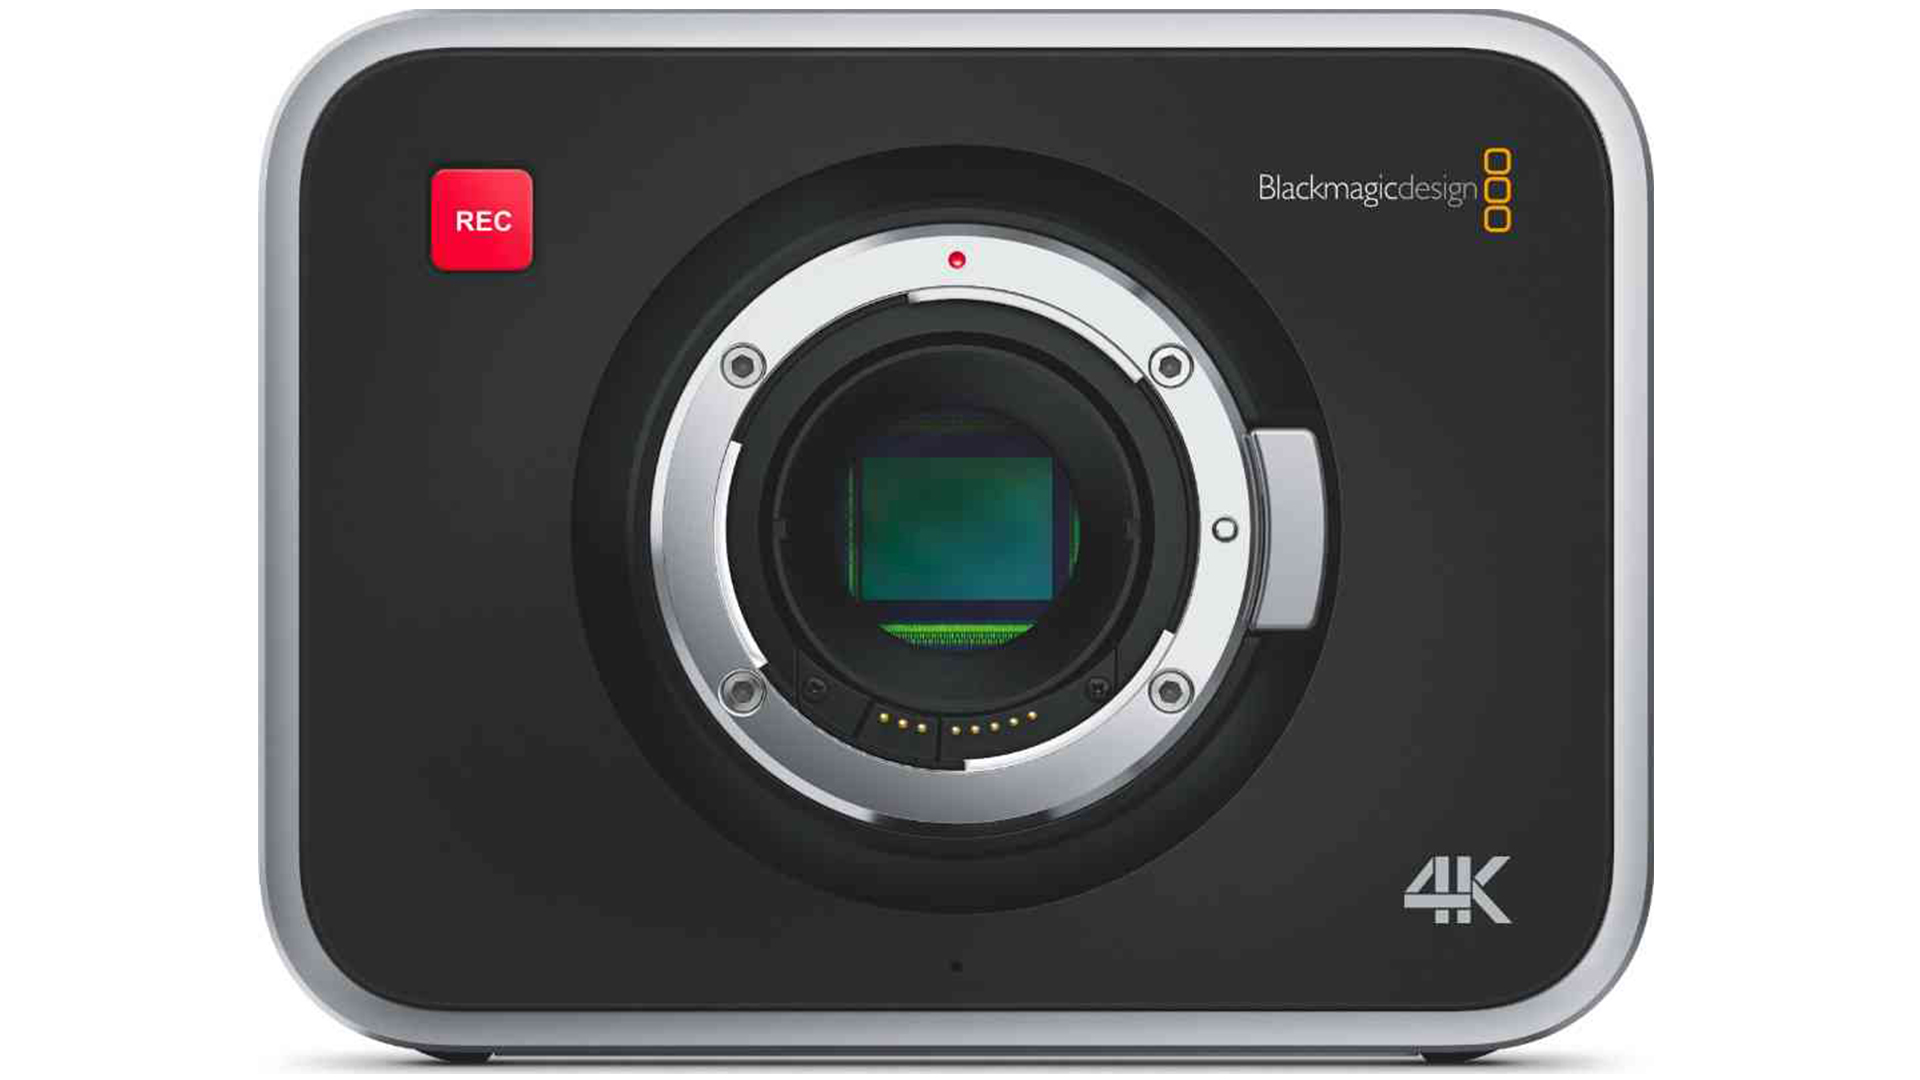 Black magic pocket cinema camera firmware update utility 2.0 for mac download